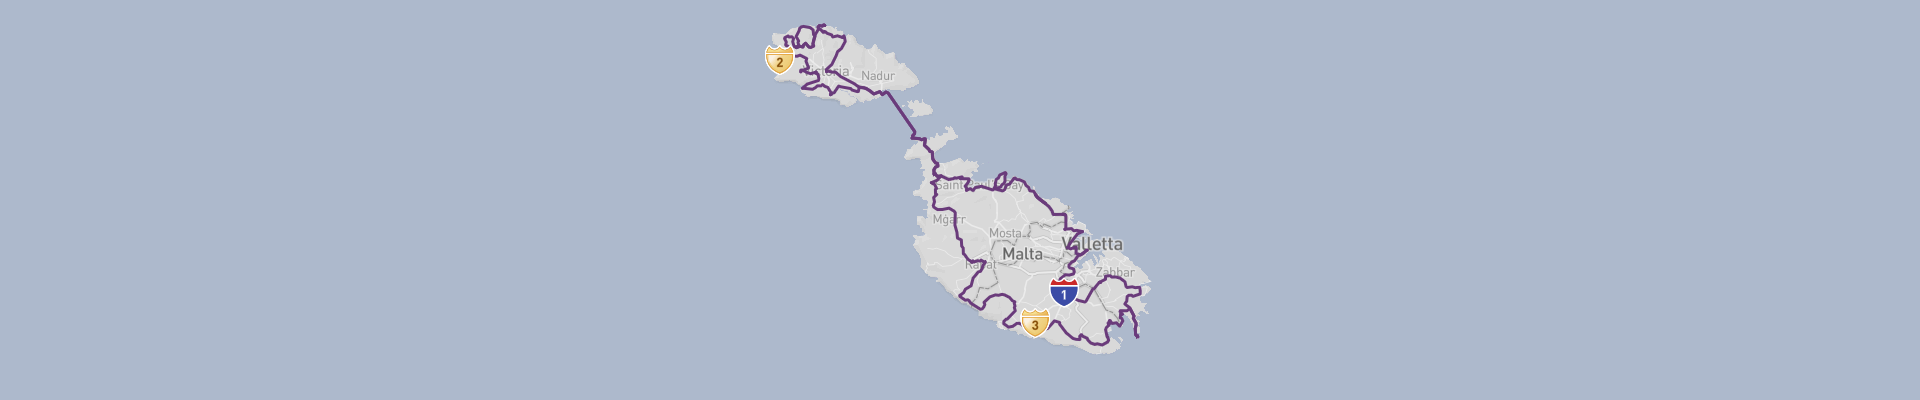 Malta Road Trip